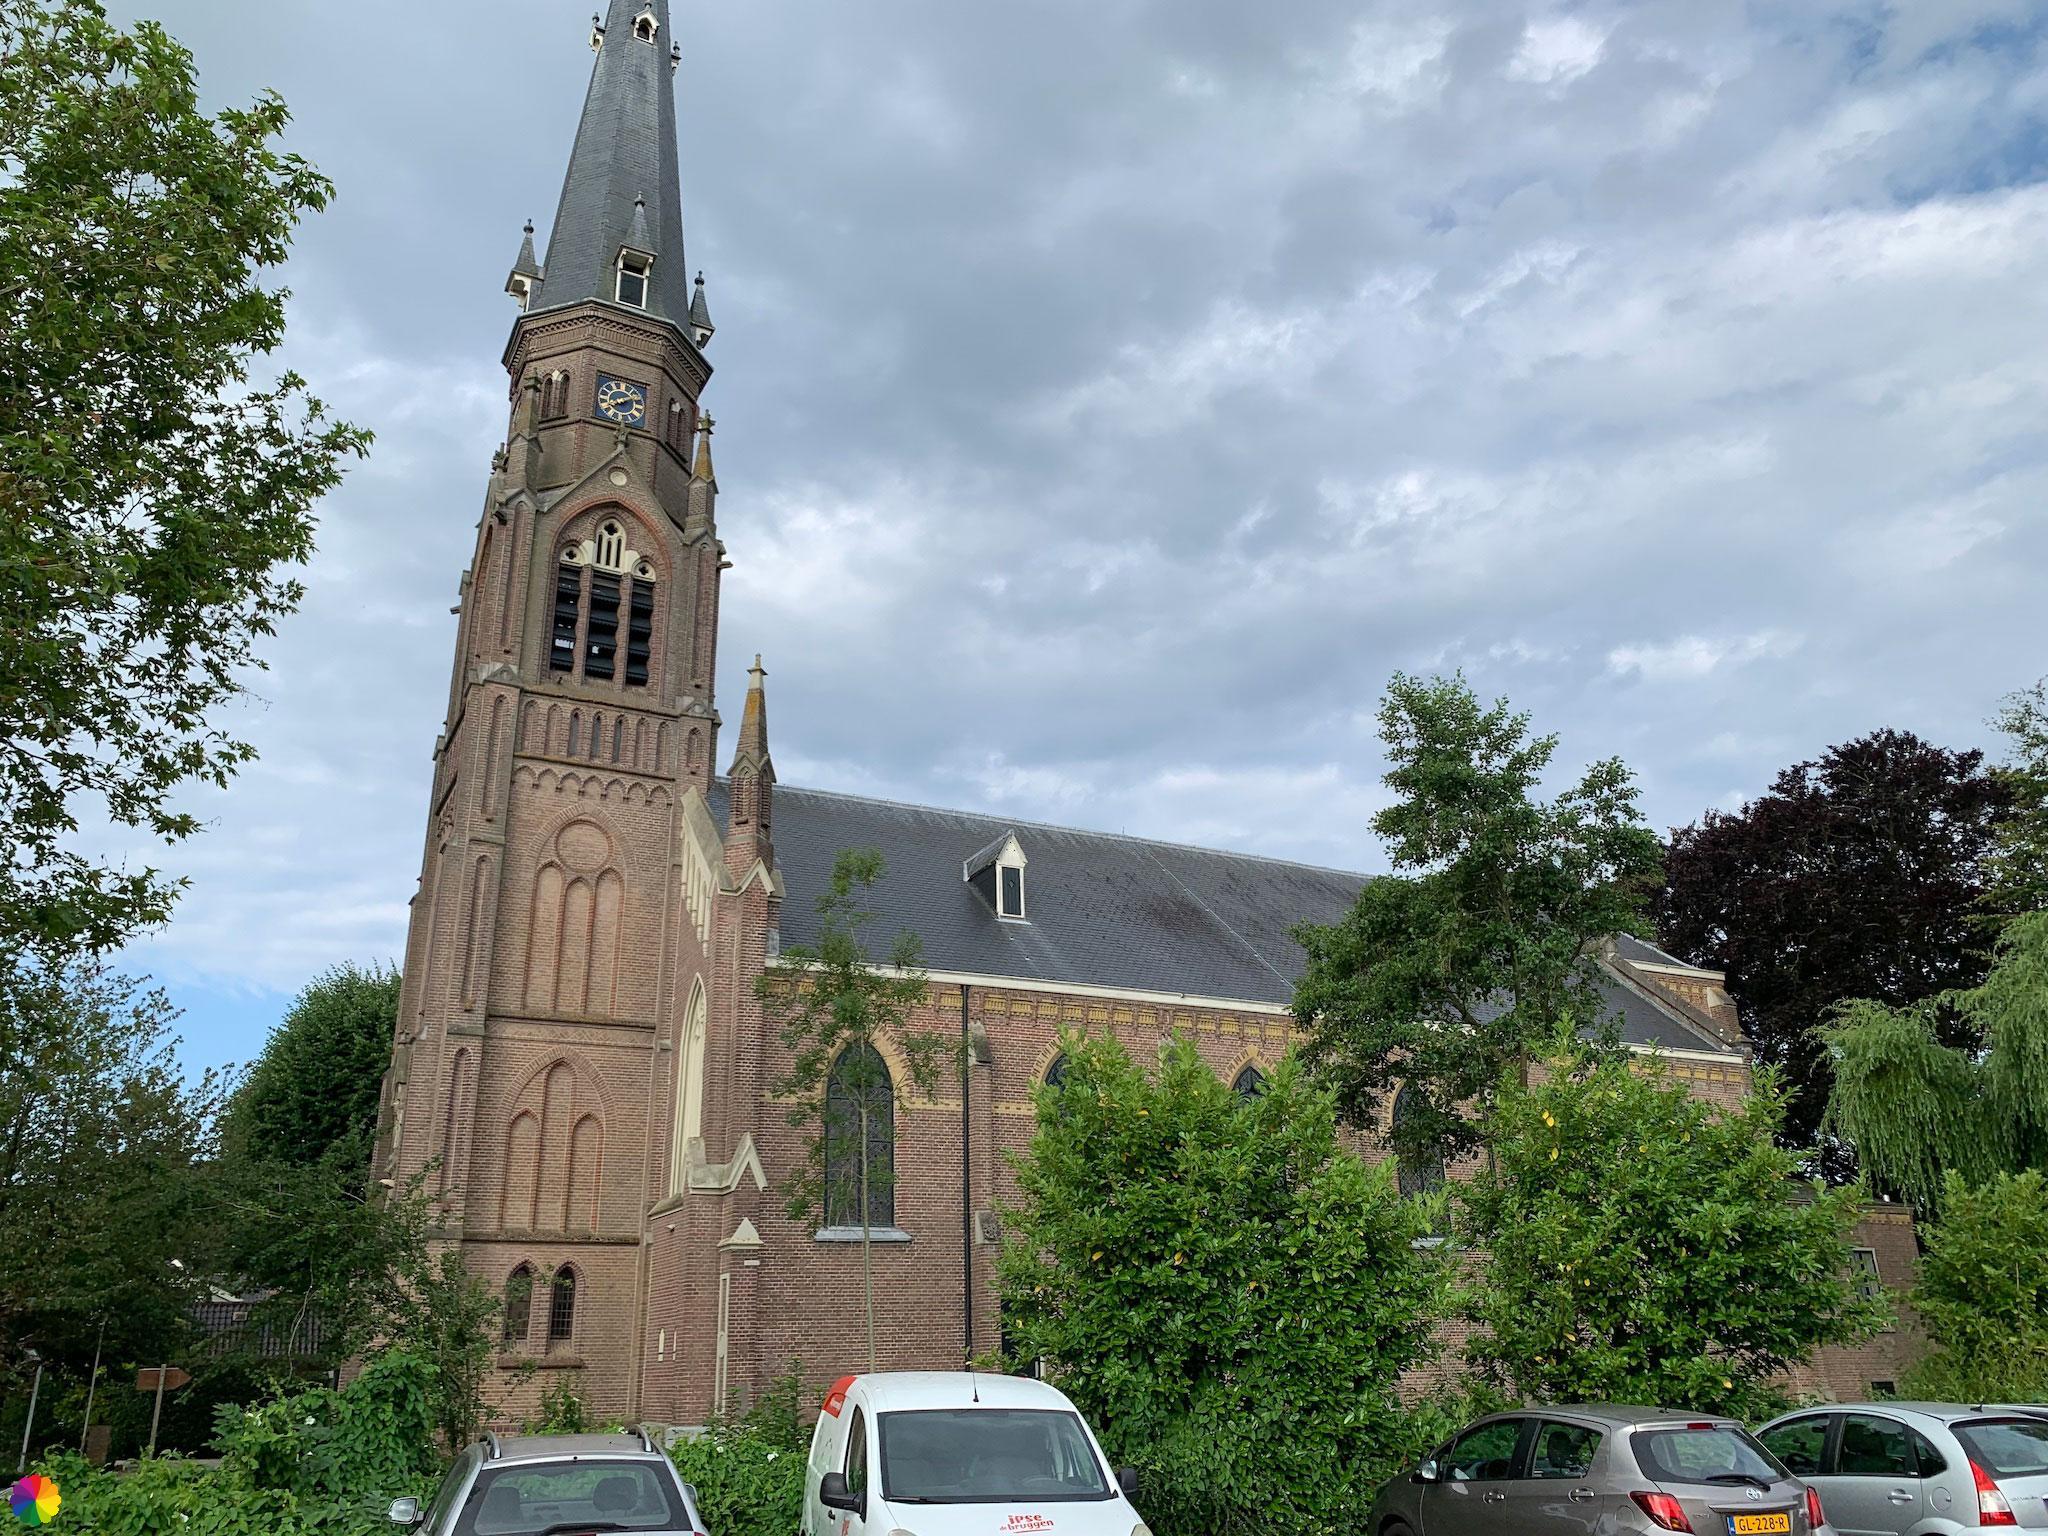 St. Nicolas church in Nieuwveen